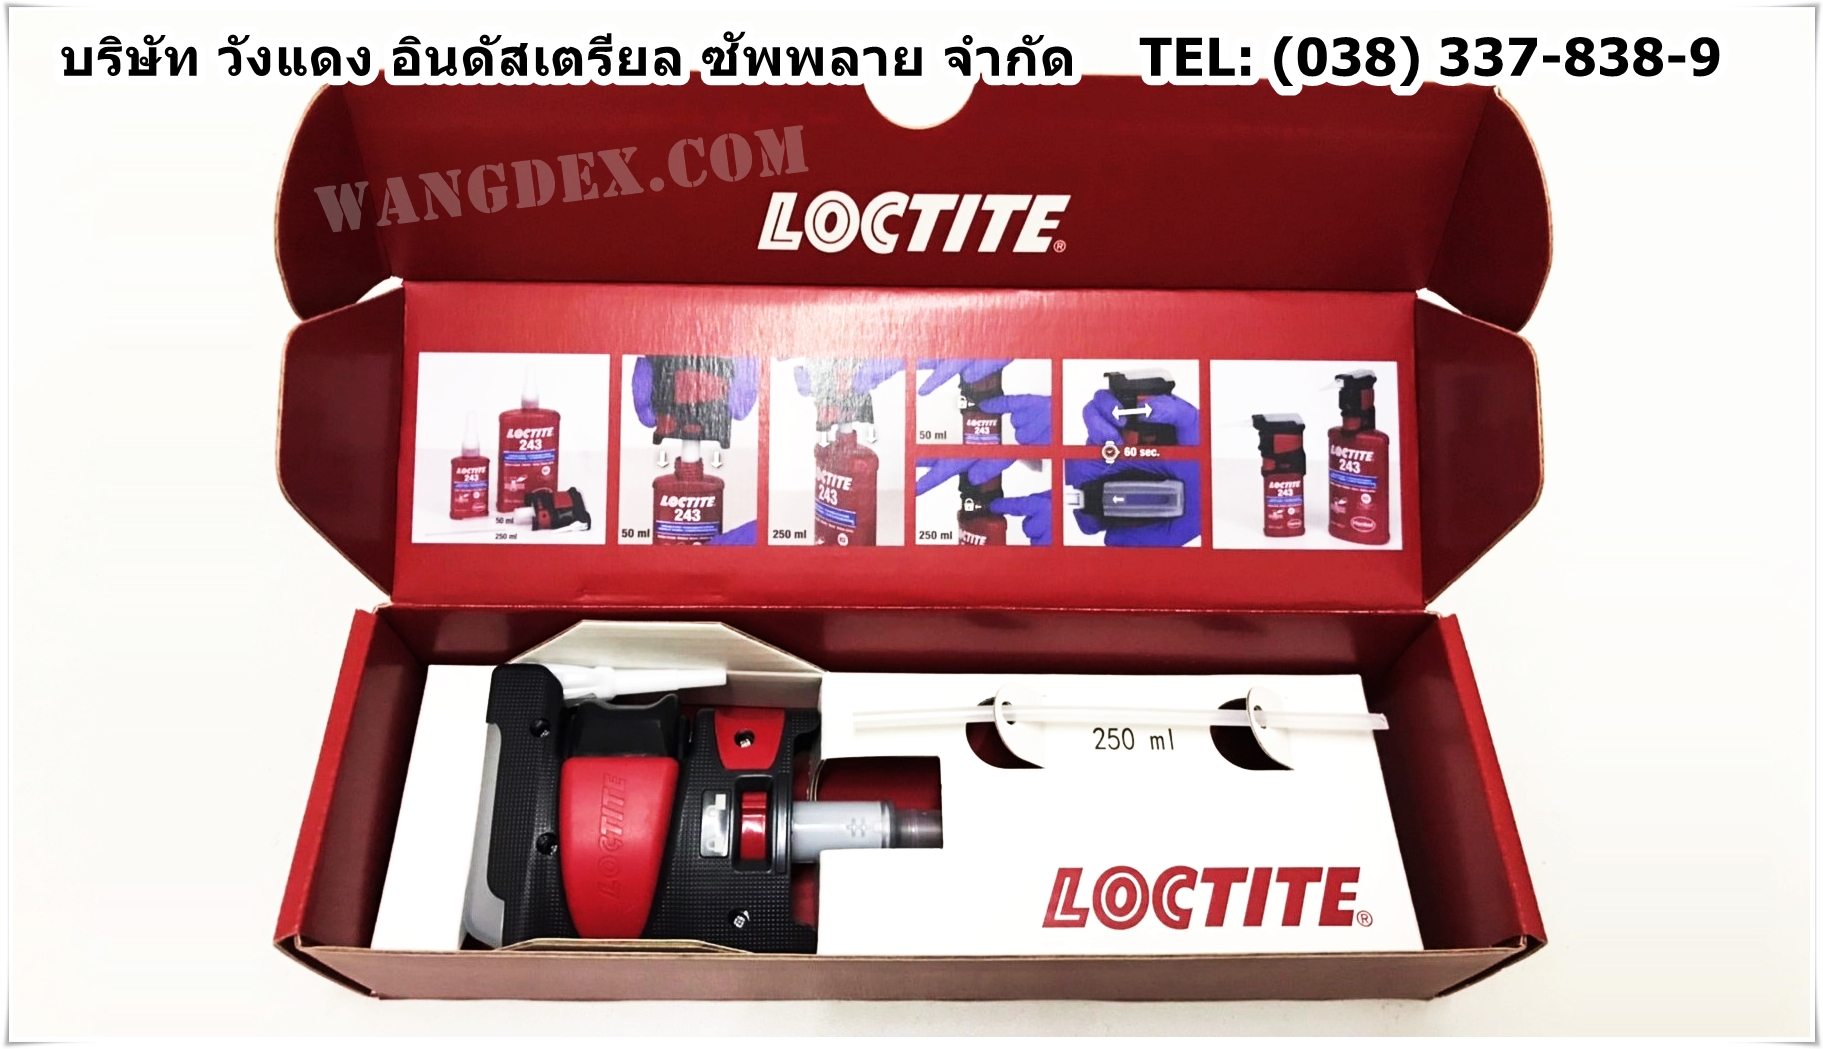 Loctite 2564842 Pro Pump Hand Held Dispenser